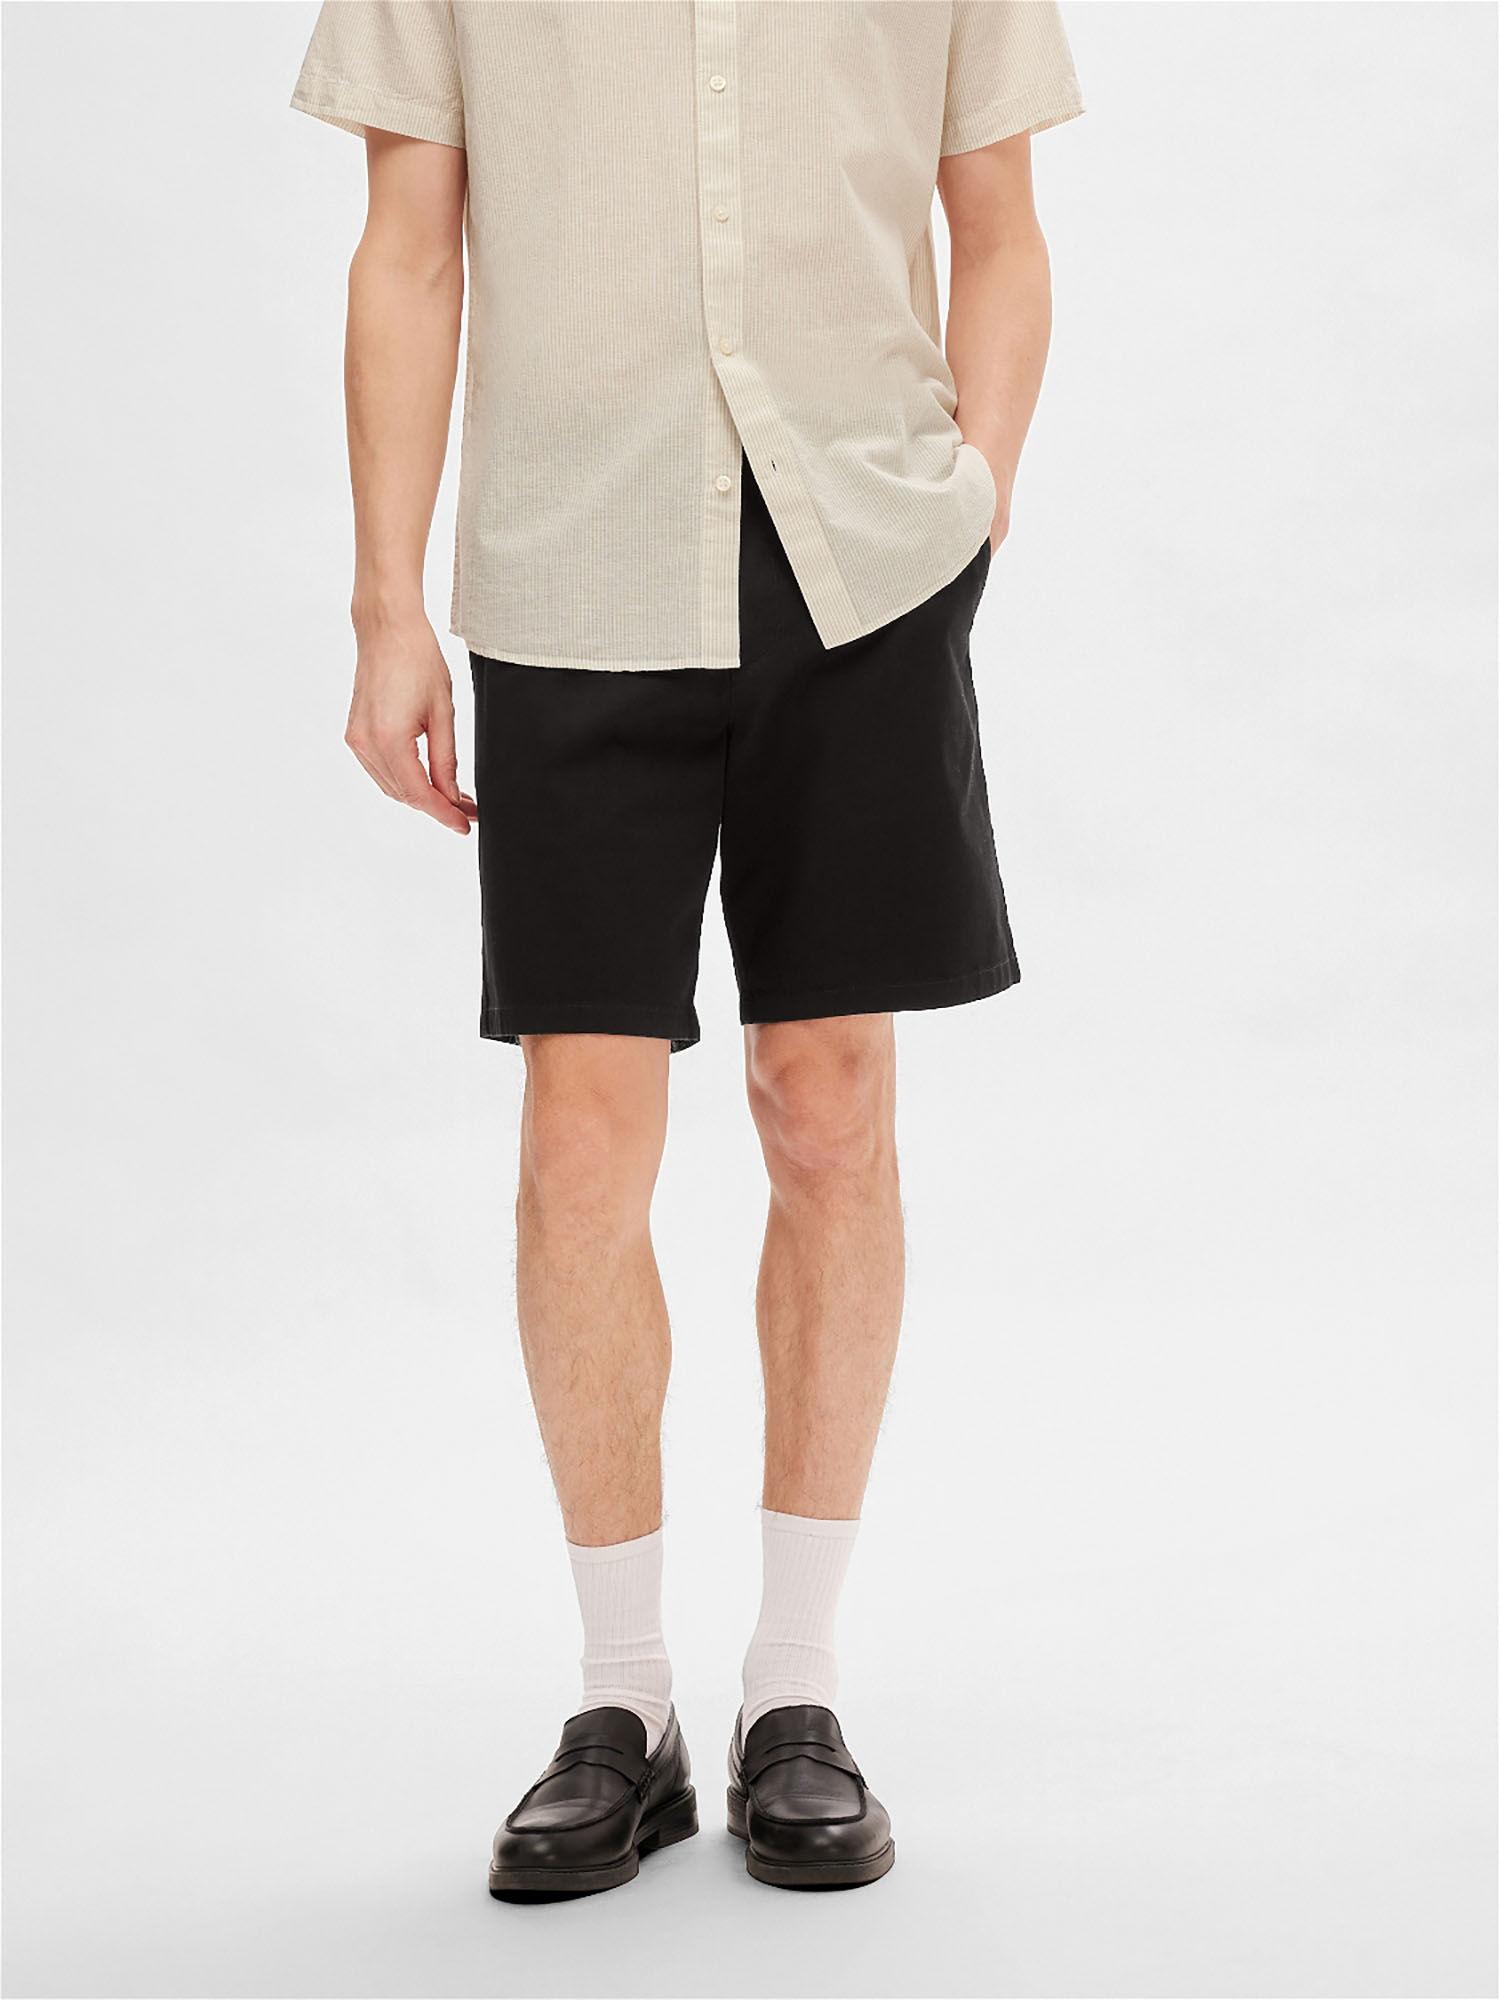 black mid rise cotton chino shorts